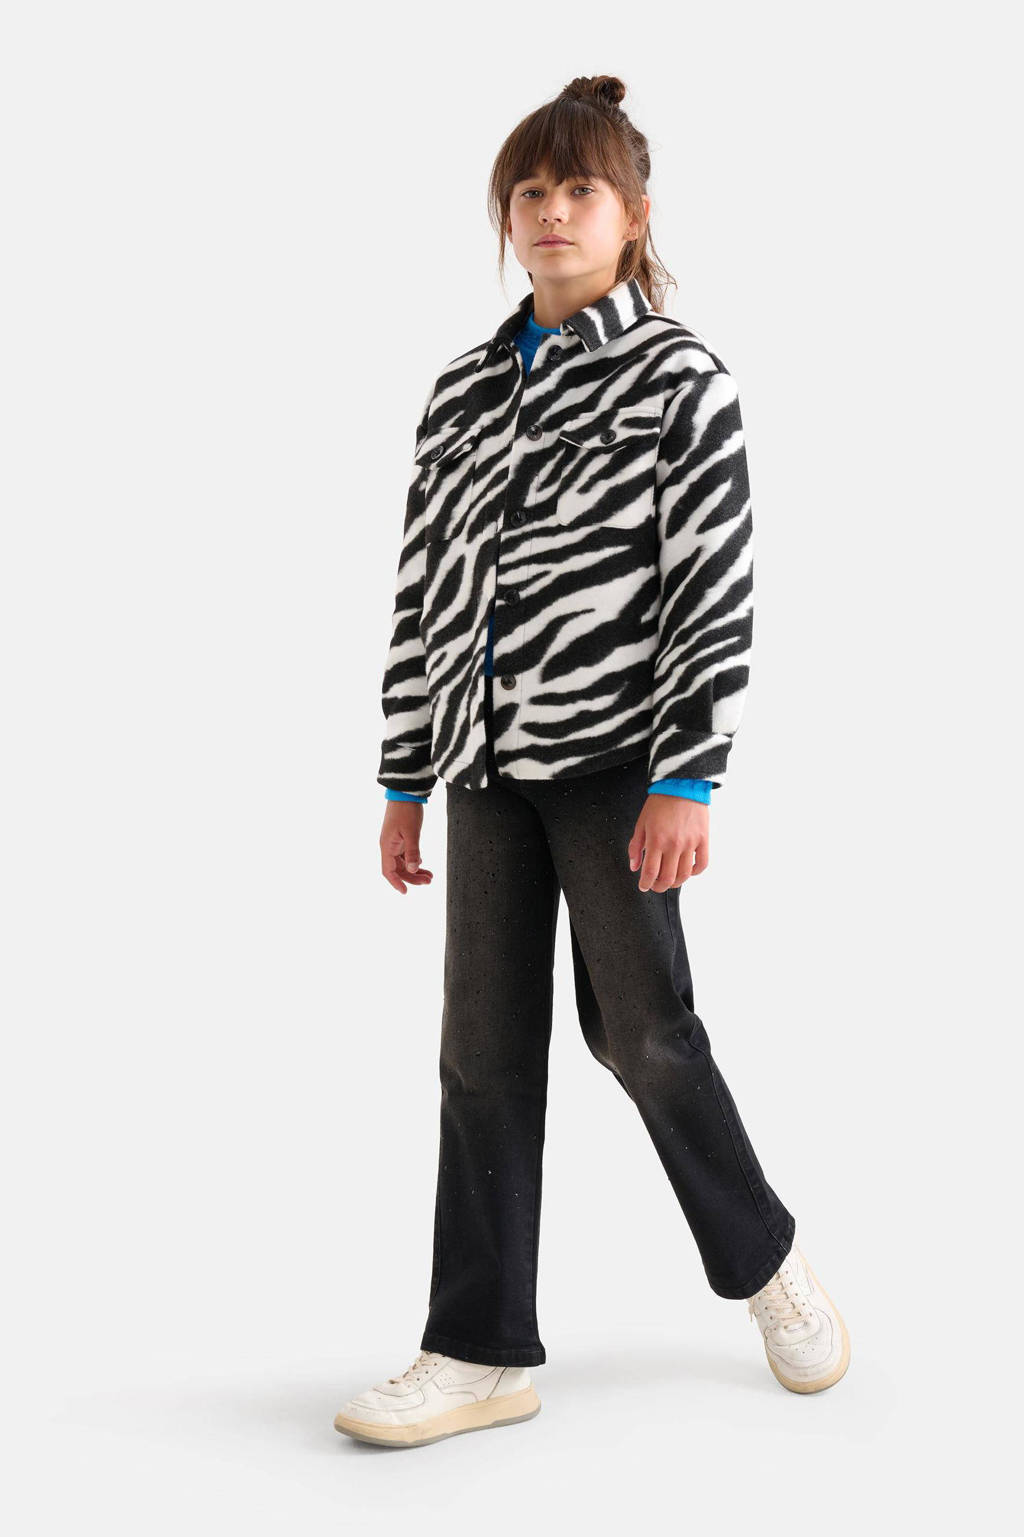 blouse Western met zebraprint zwart/wit